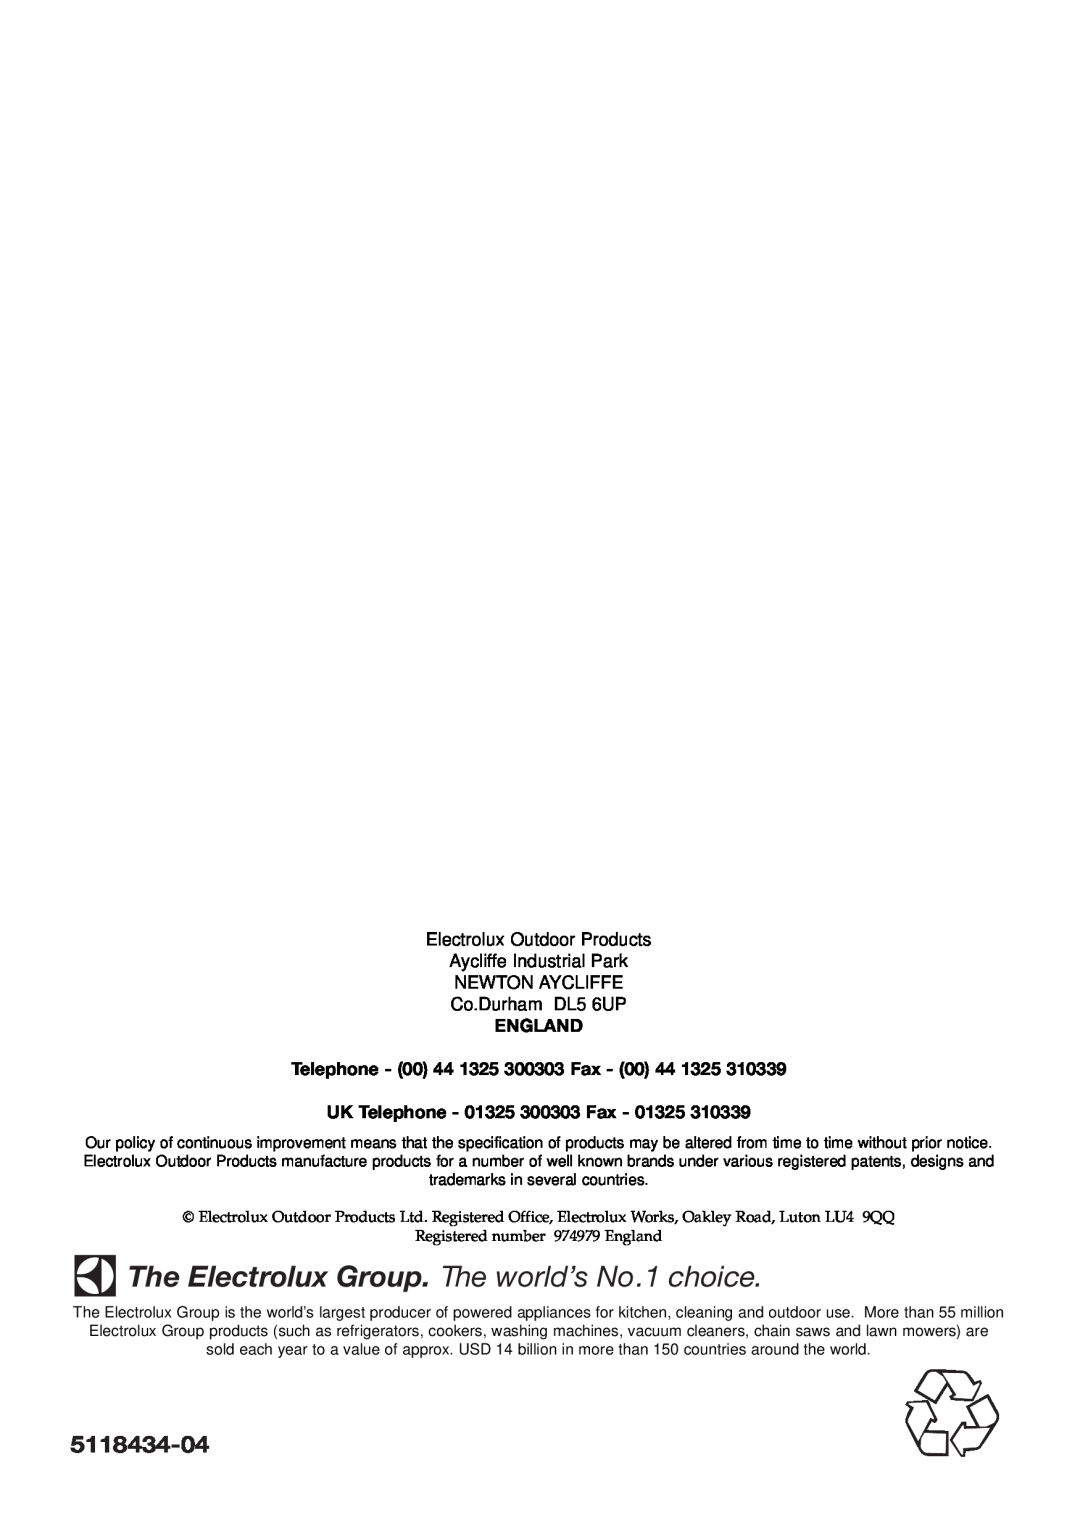 Flymo EHT 450s, EHT 420, EHT 530s manual The Electrolux Group. The world’s No.1 choice, 5118434-04, Co.Durham DL5 6UP 